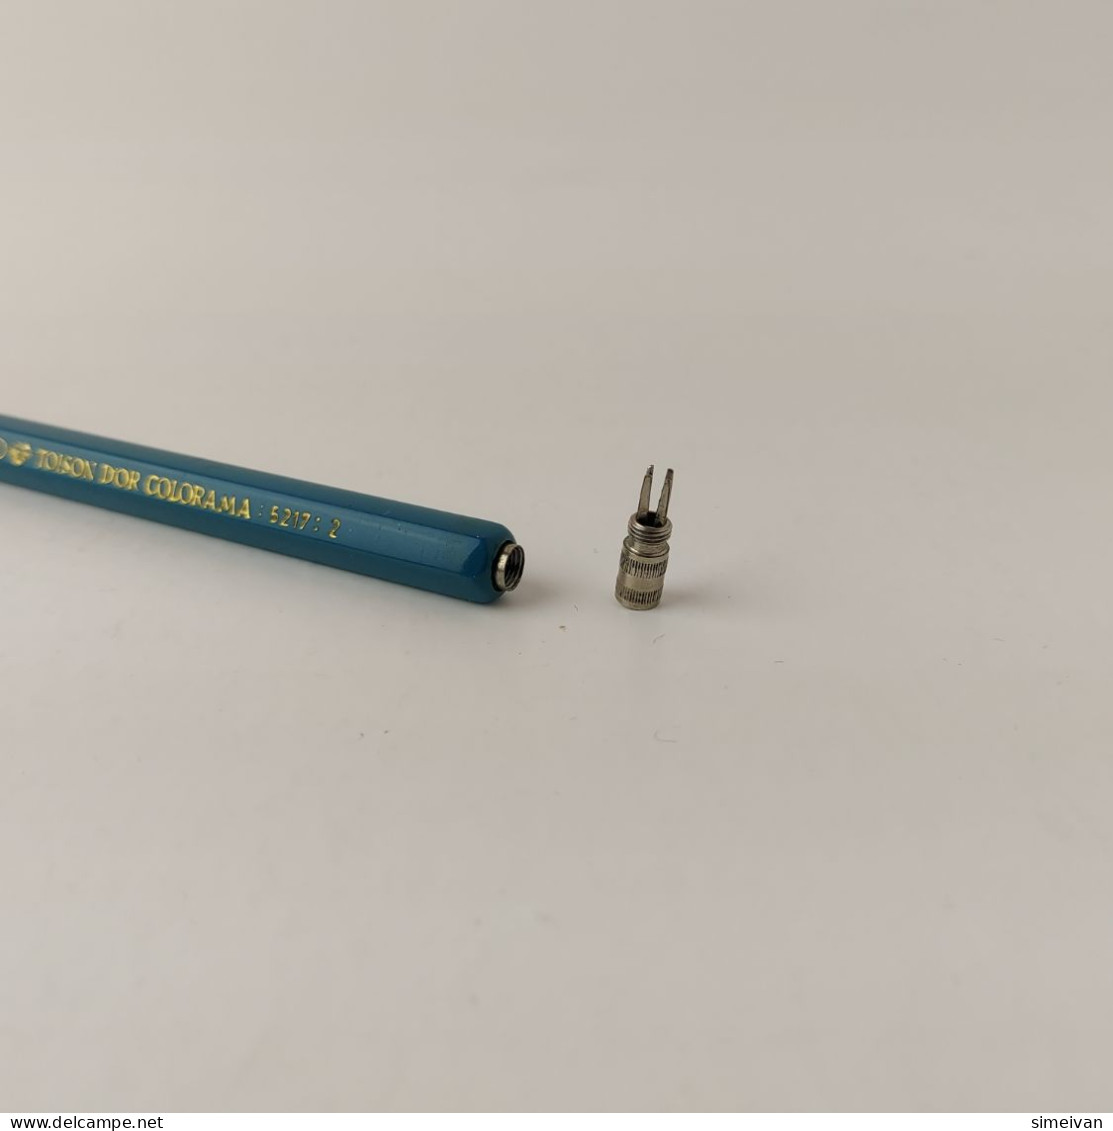 Vintage Mechanical Pencil TOISON D'OR COLORAMA 5217:2 Bohemia Works Blue #5490